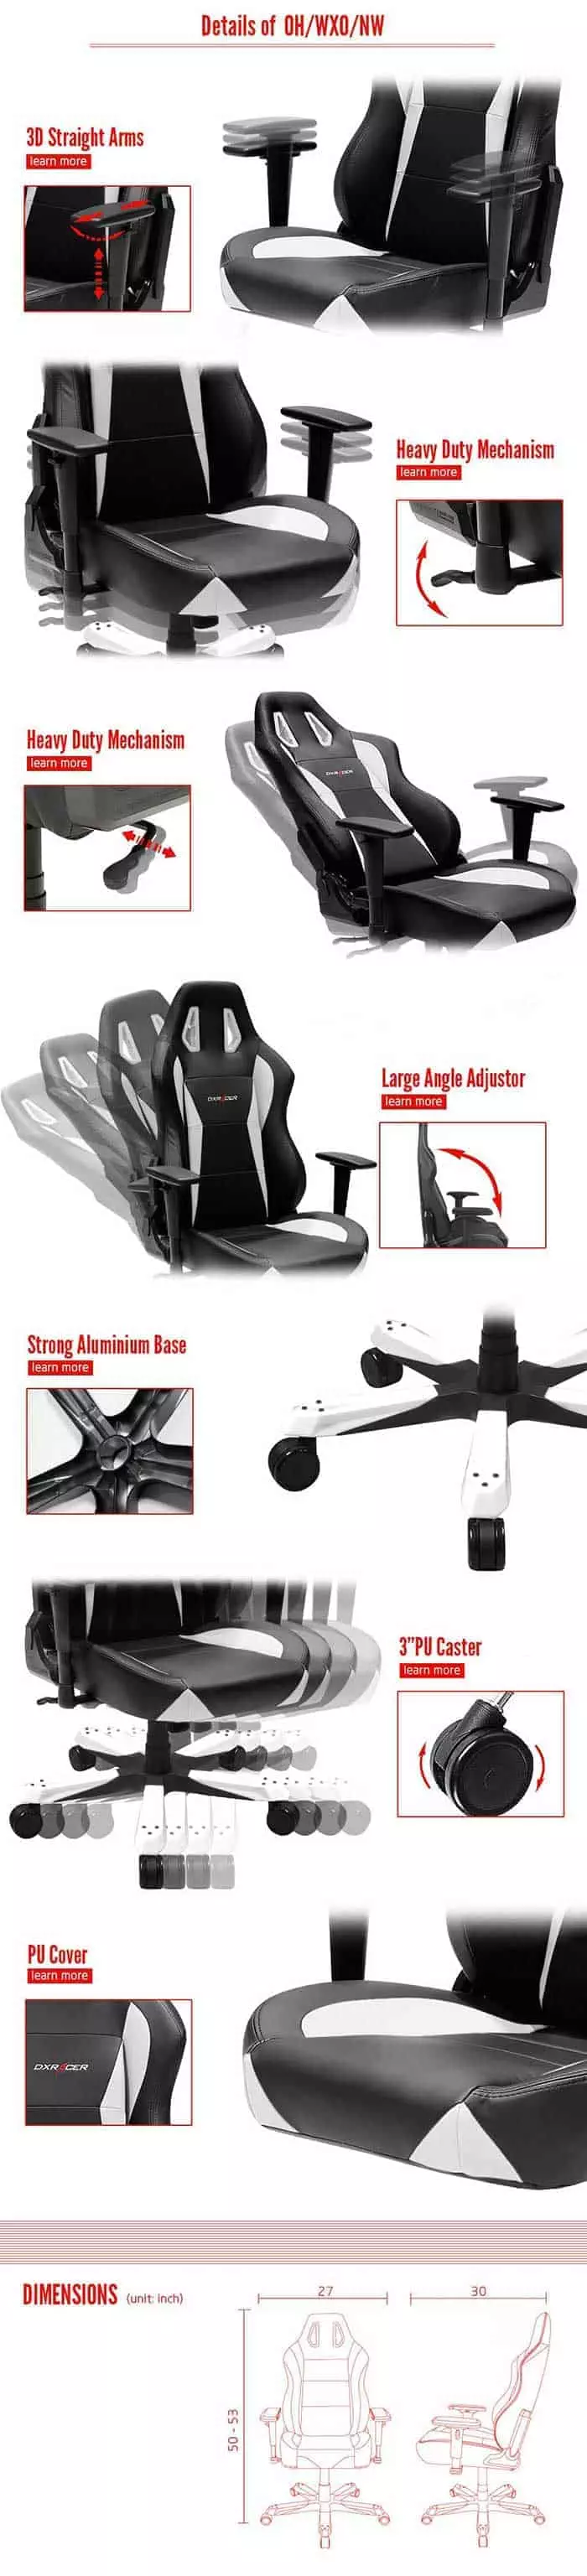 dxracer wide gaming chair